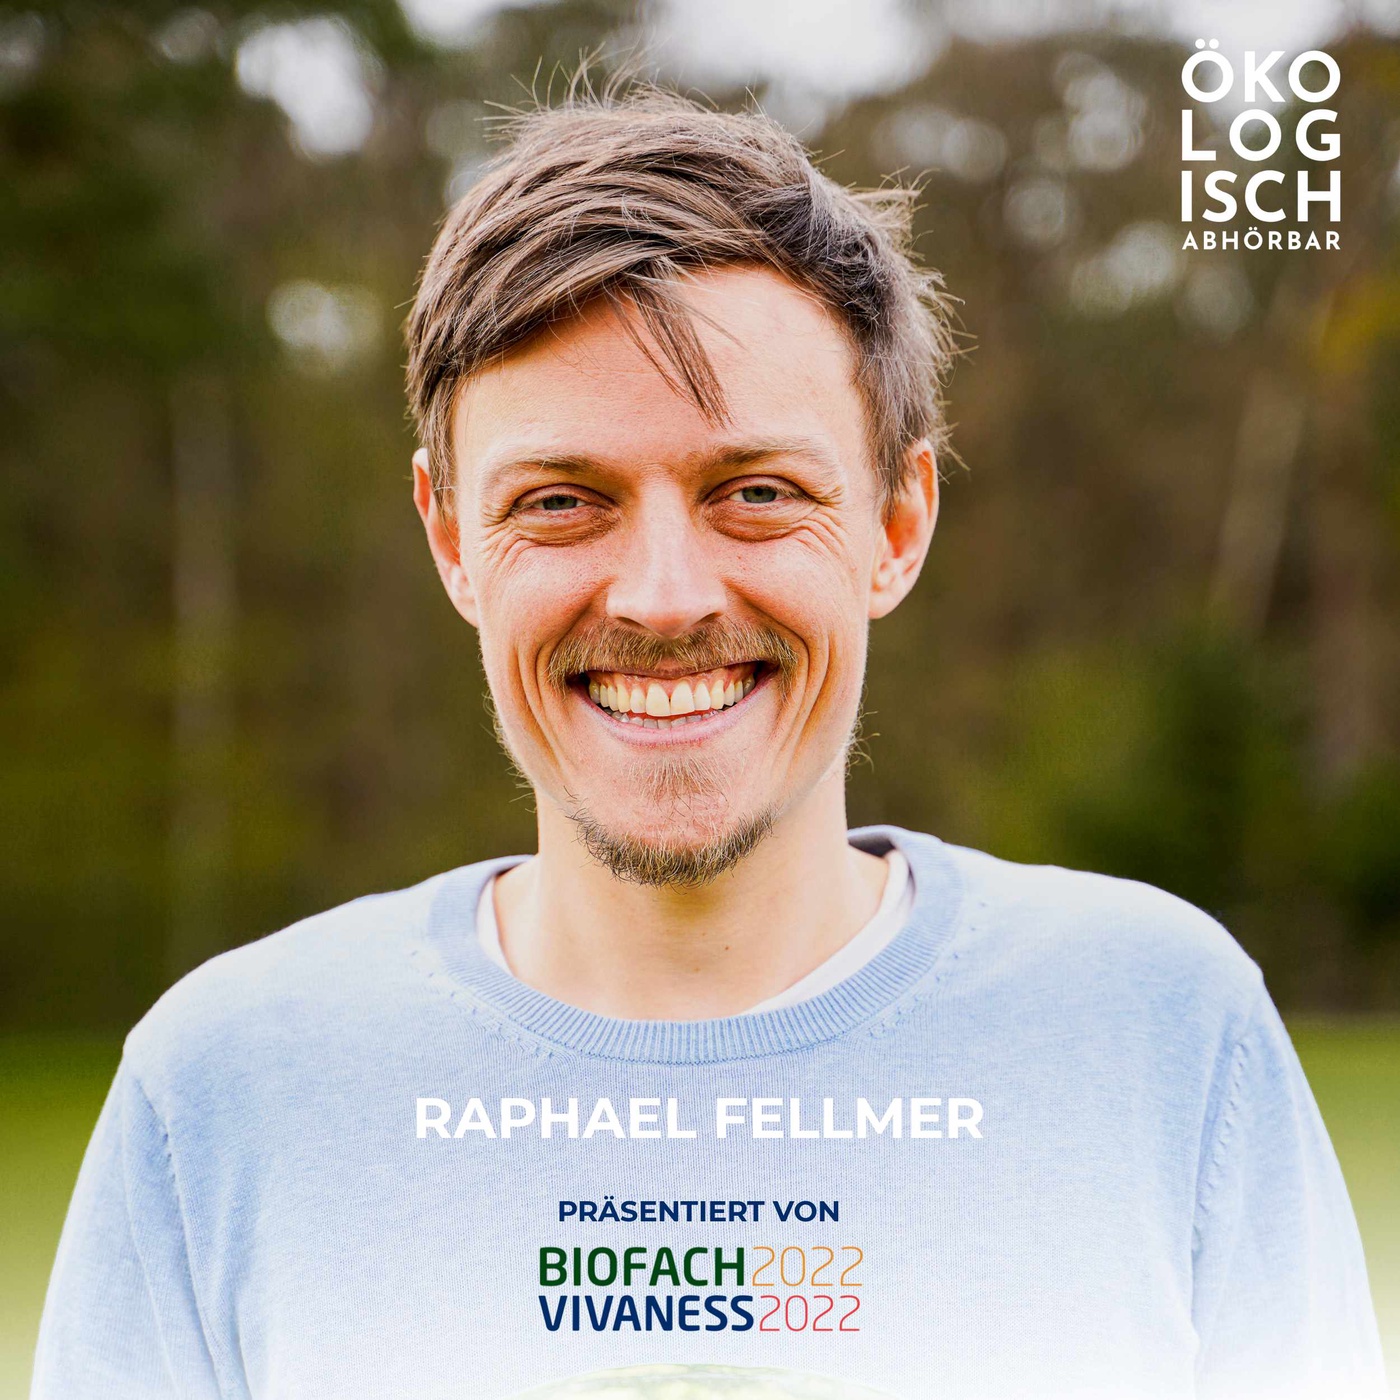 Raphael Fellmer - Handel und Politik im Umgang mit Food Waste